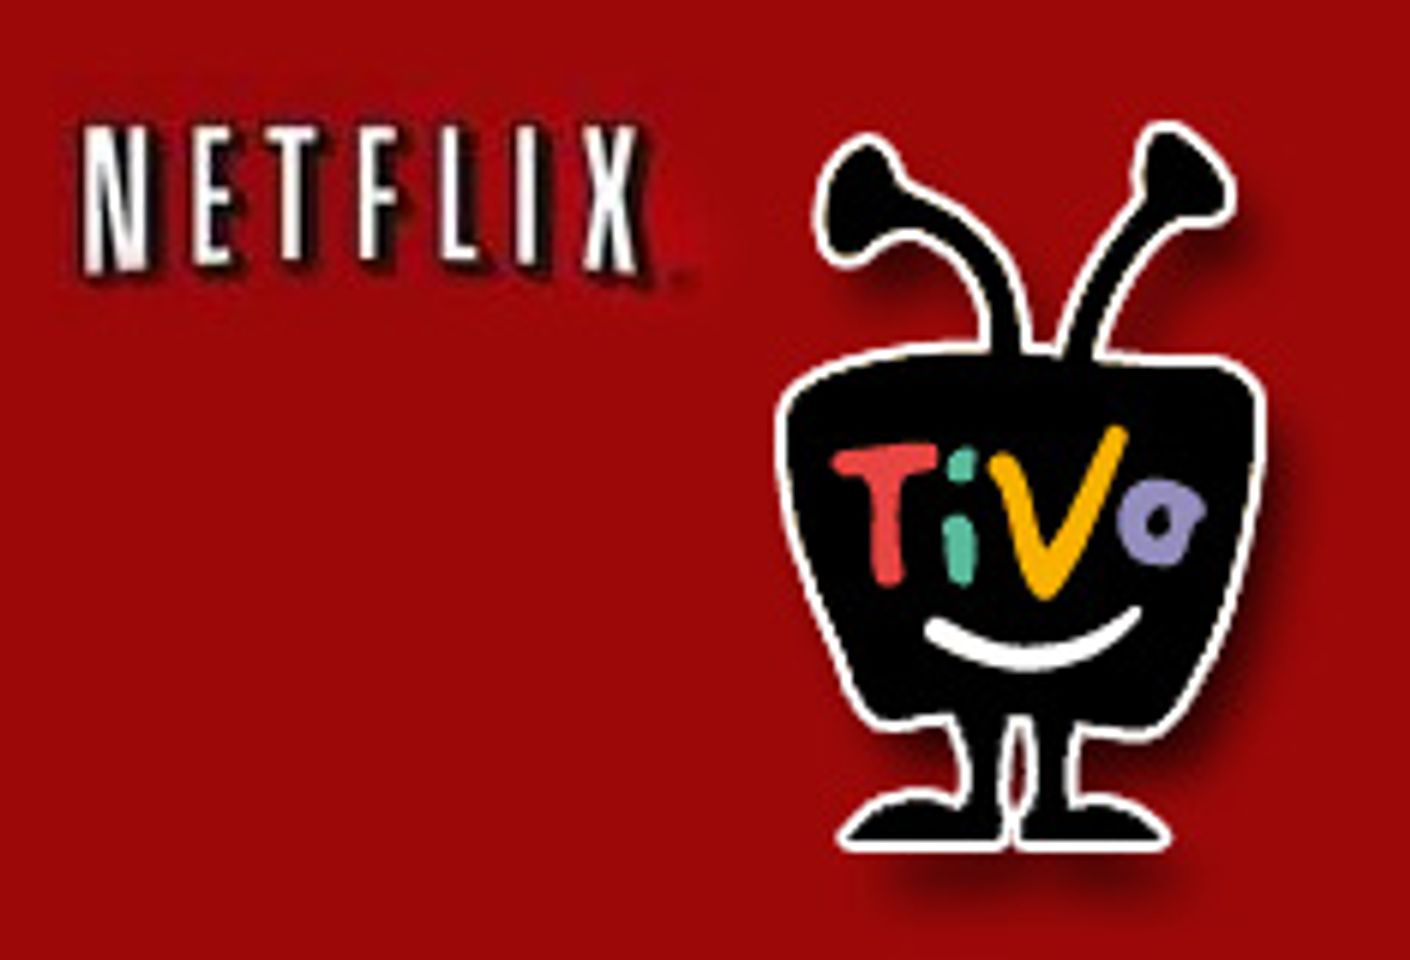 Netflix, TiVo Confirm Movie Download Partnership